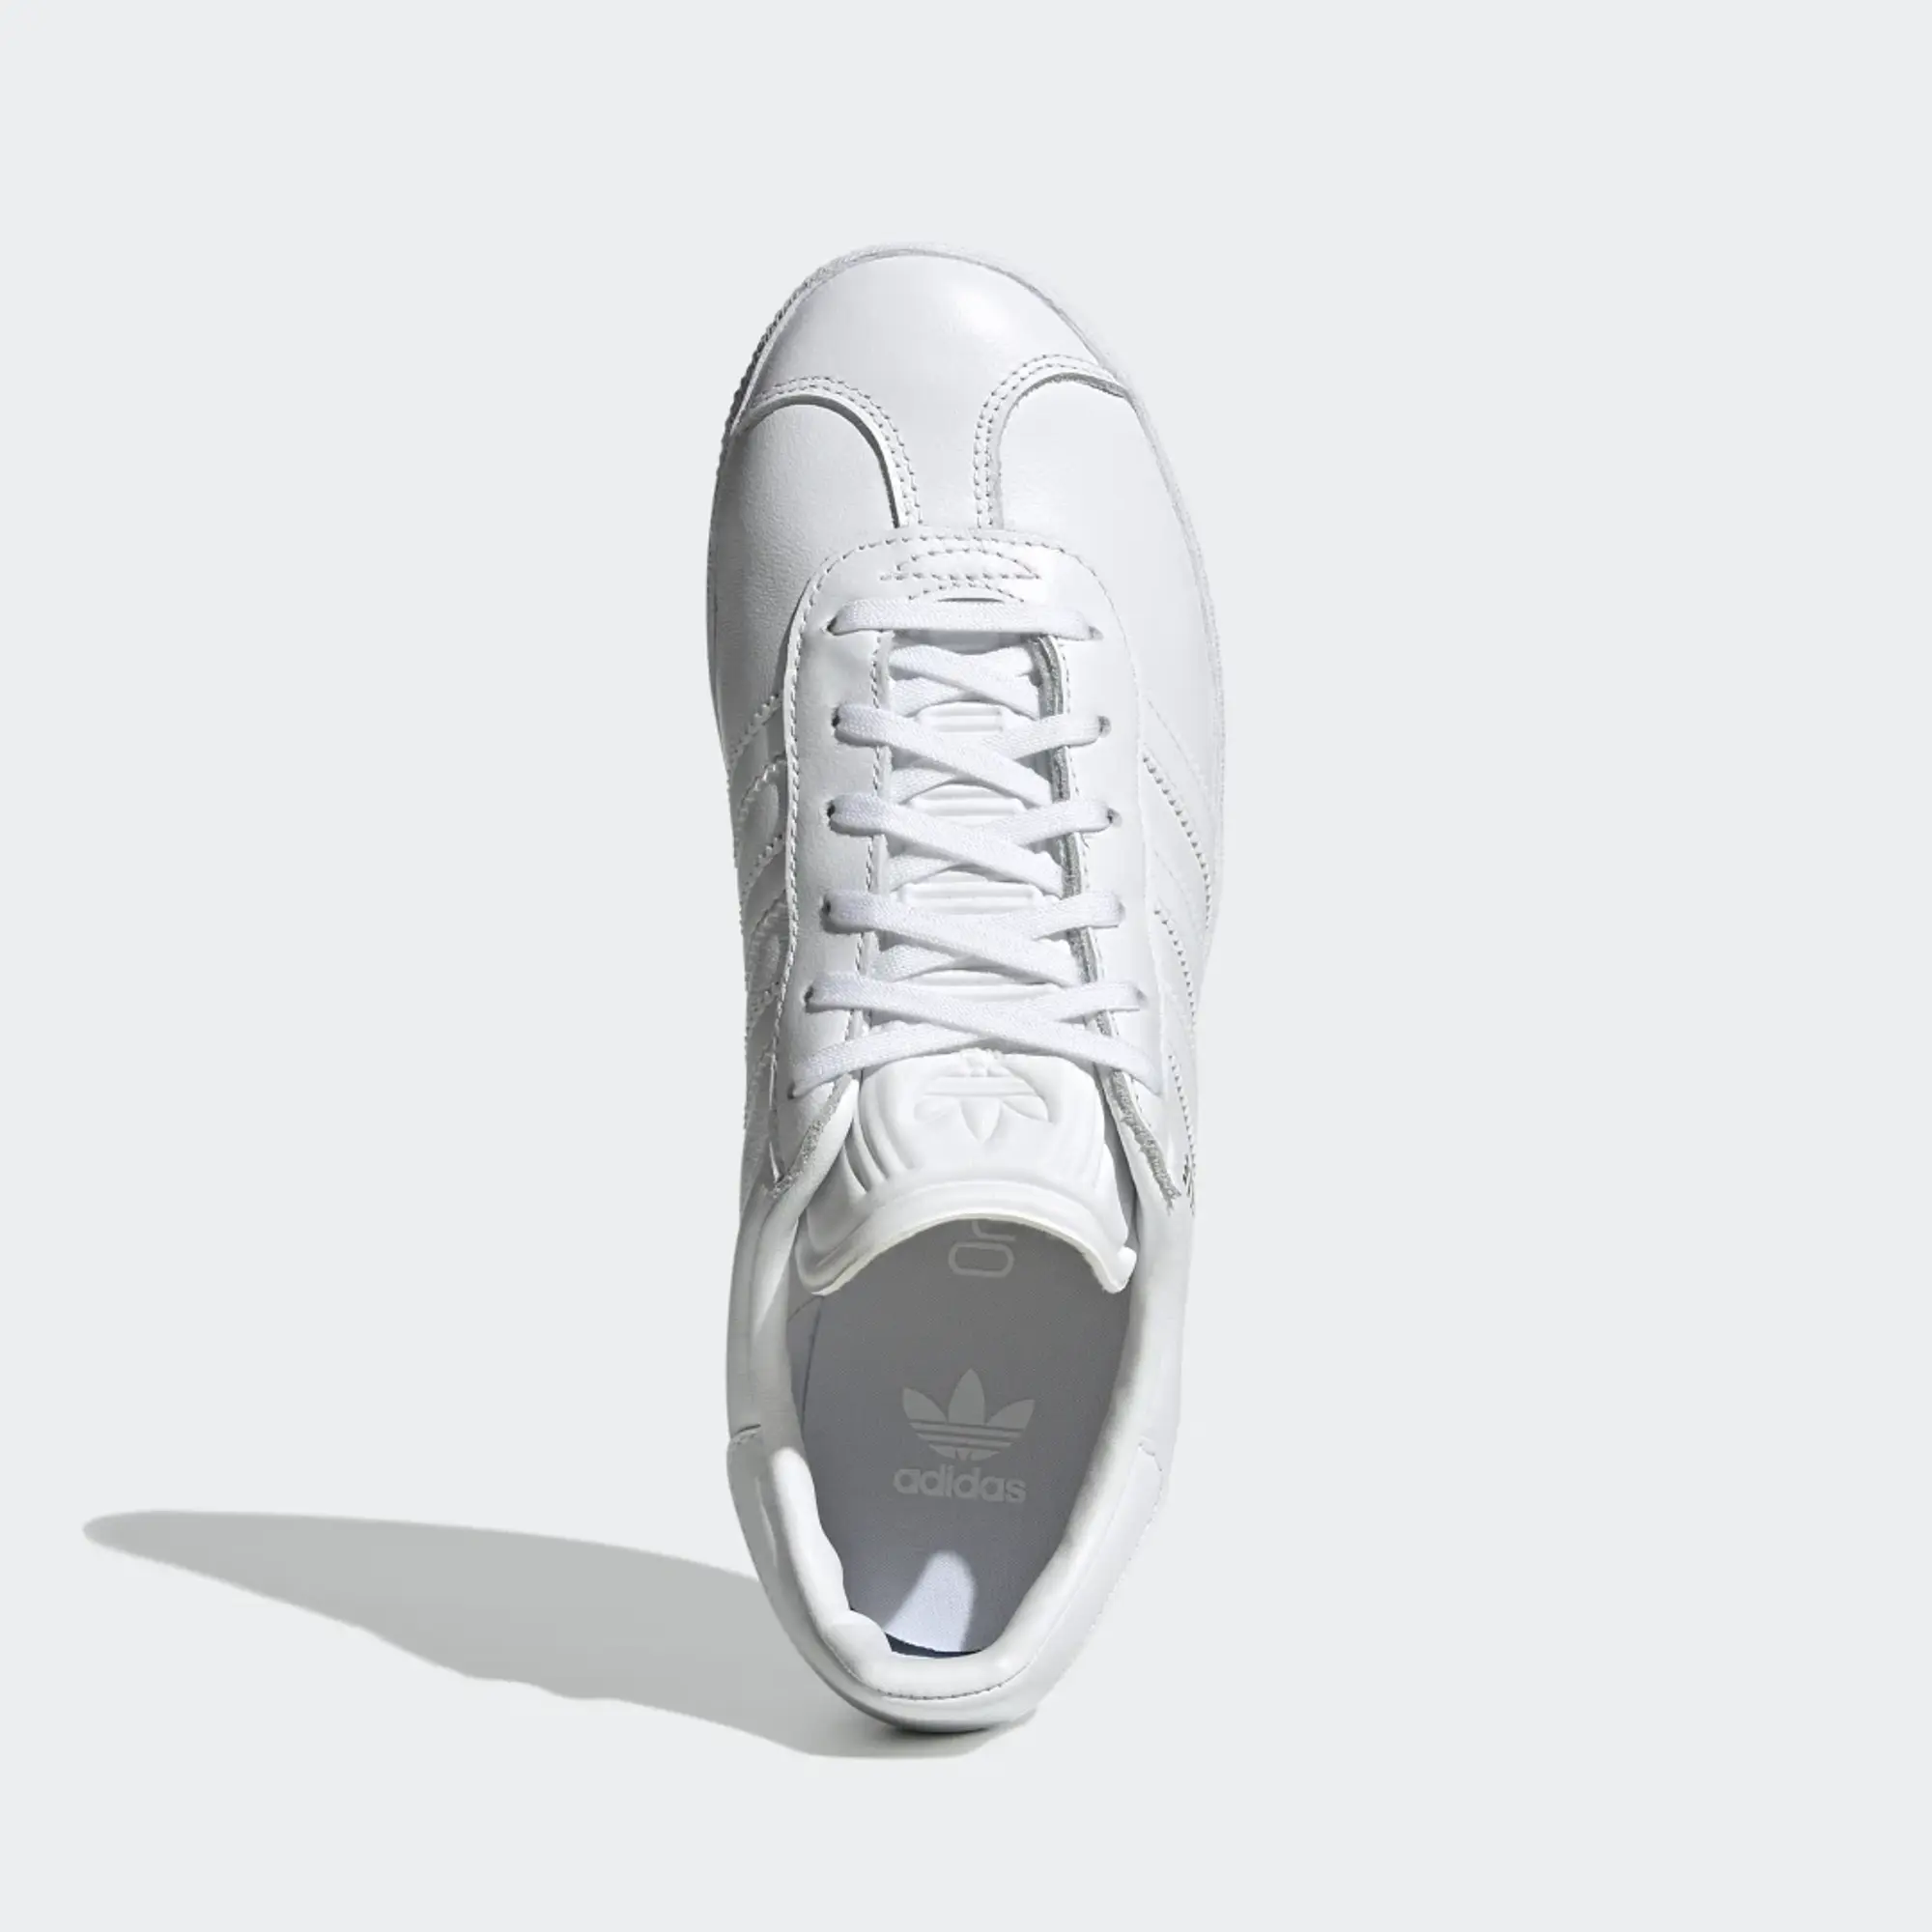 adidas Originals Unisex Junior Gazelle Trainers - White/White, White